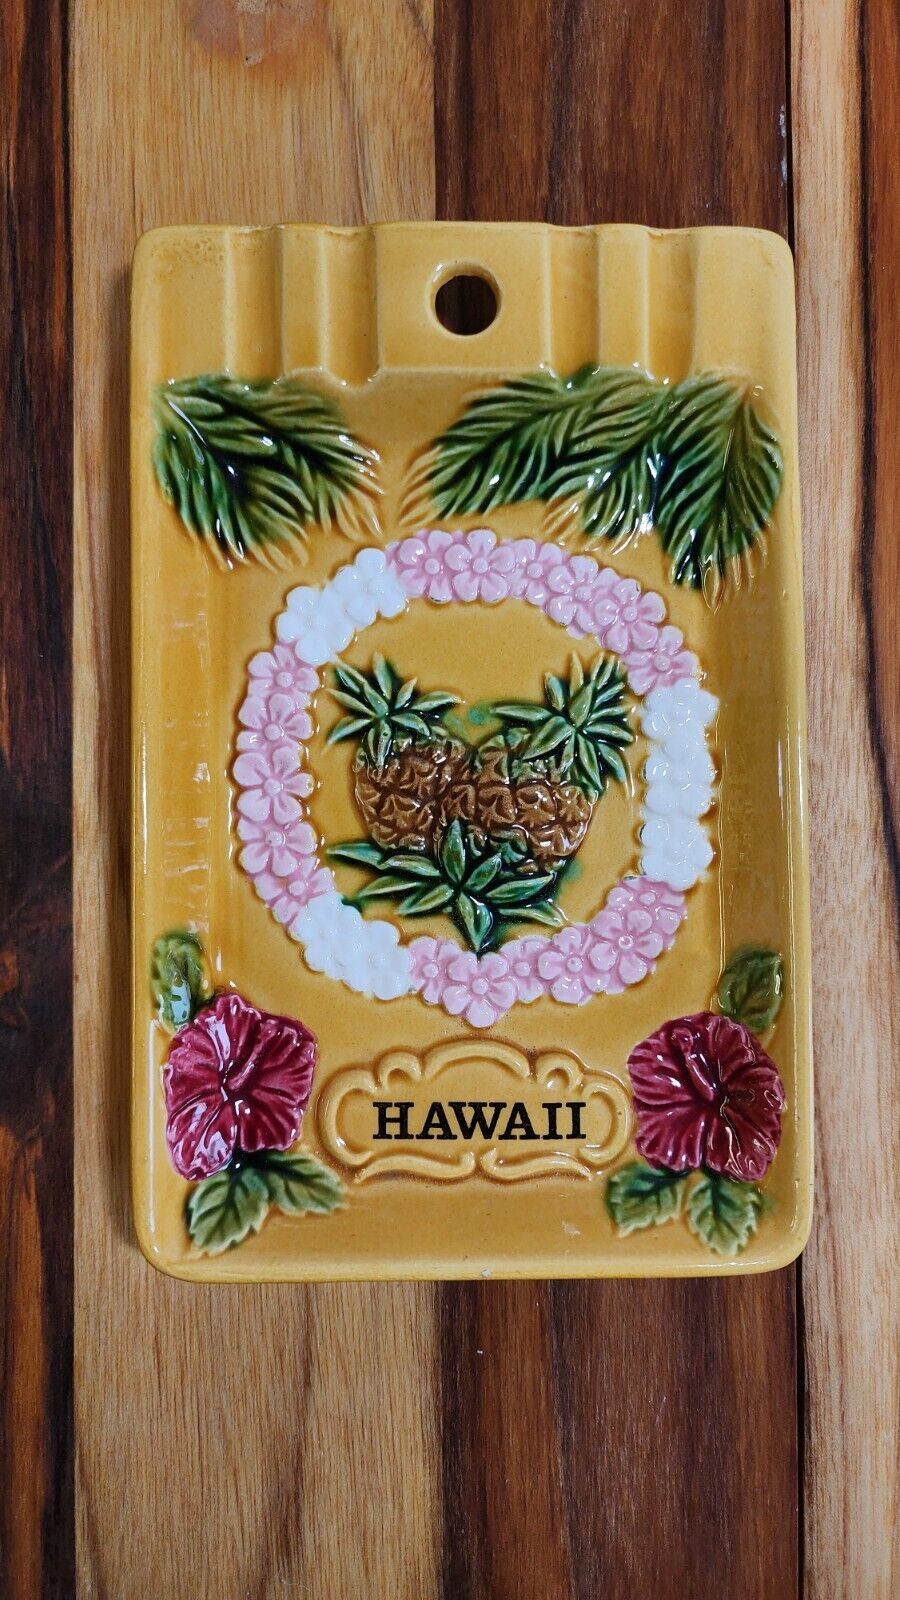 Vintage Hawaii Ceramic Ashtray (Made in Japan)